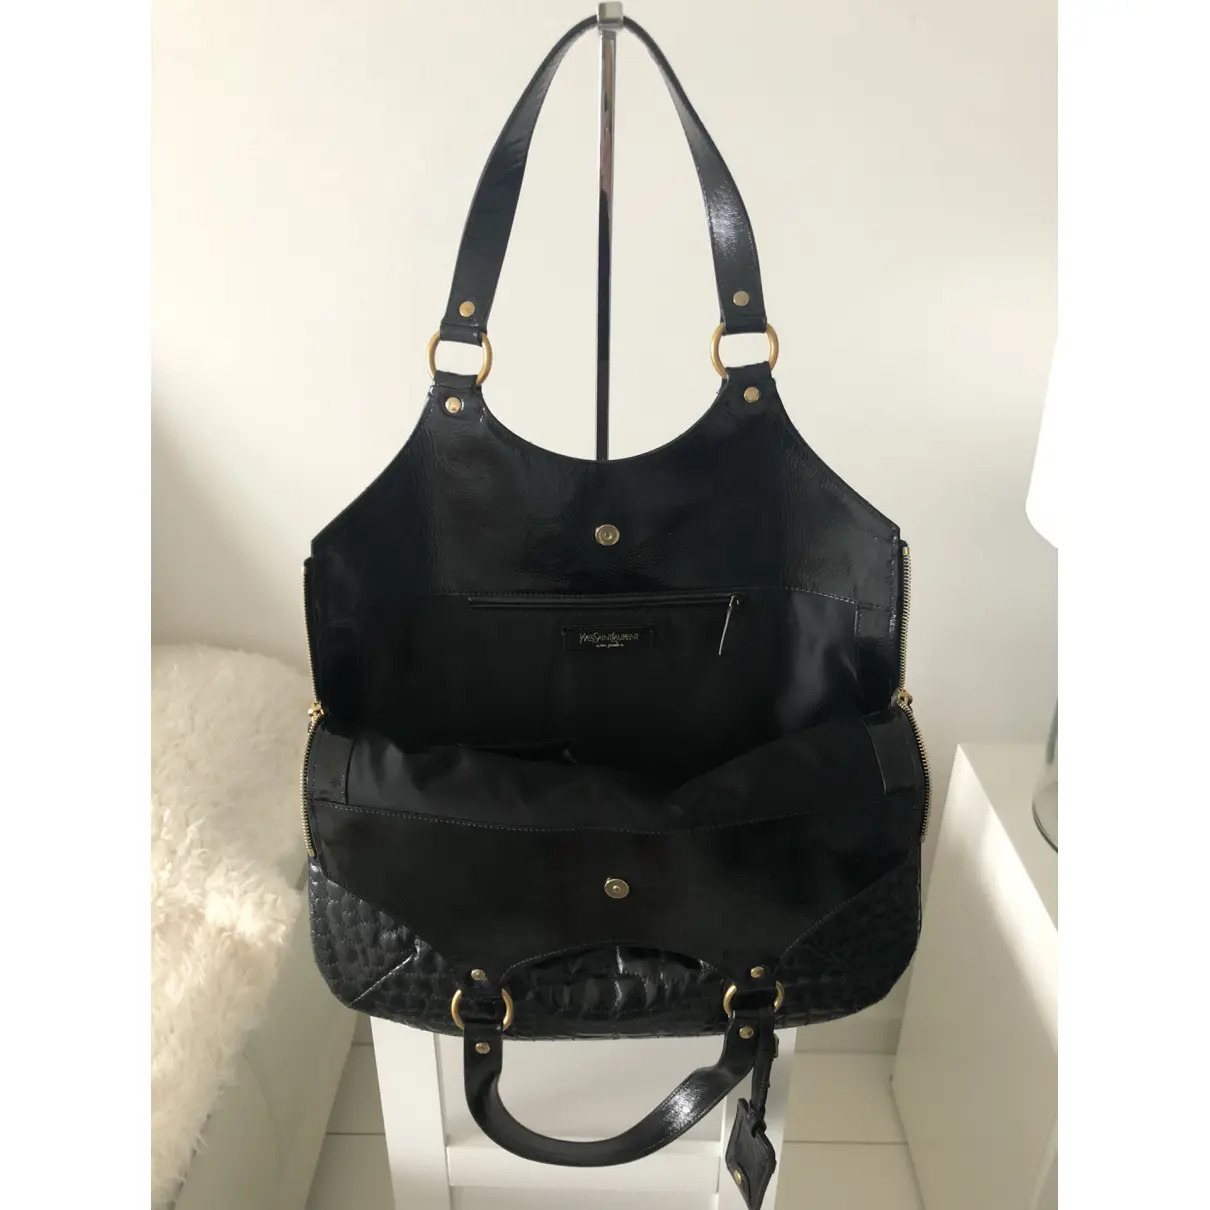 Buy Yves Saint Laurent Tribute leather handbag online - Vintage